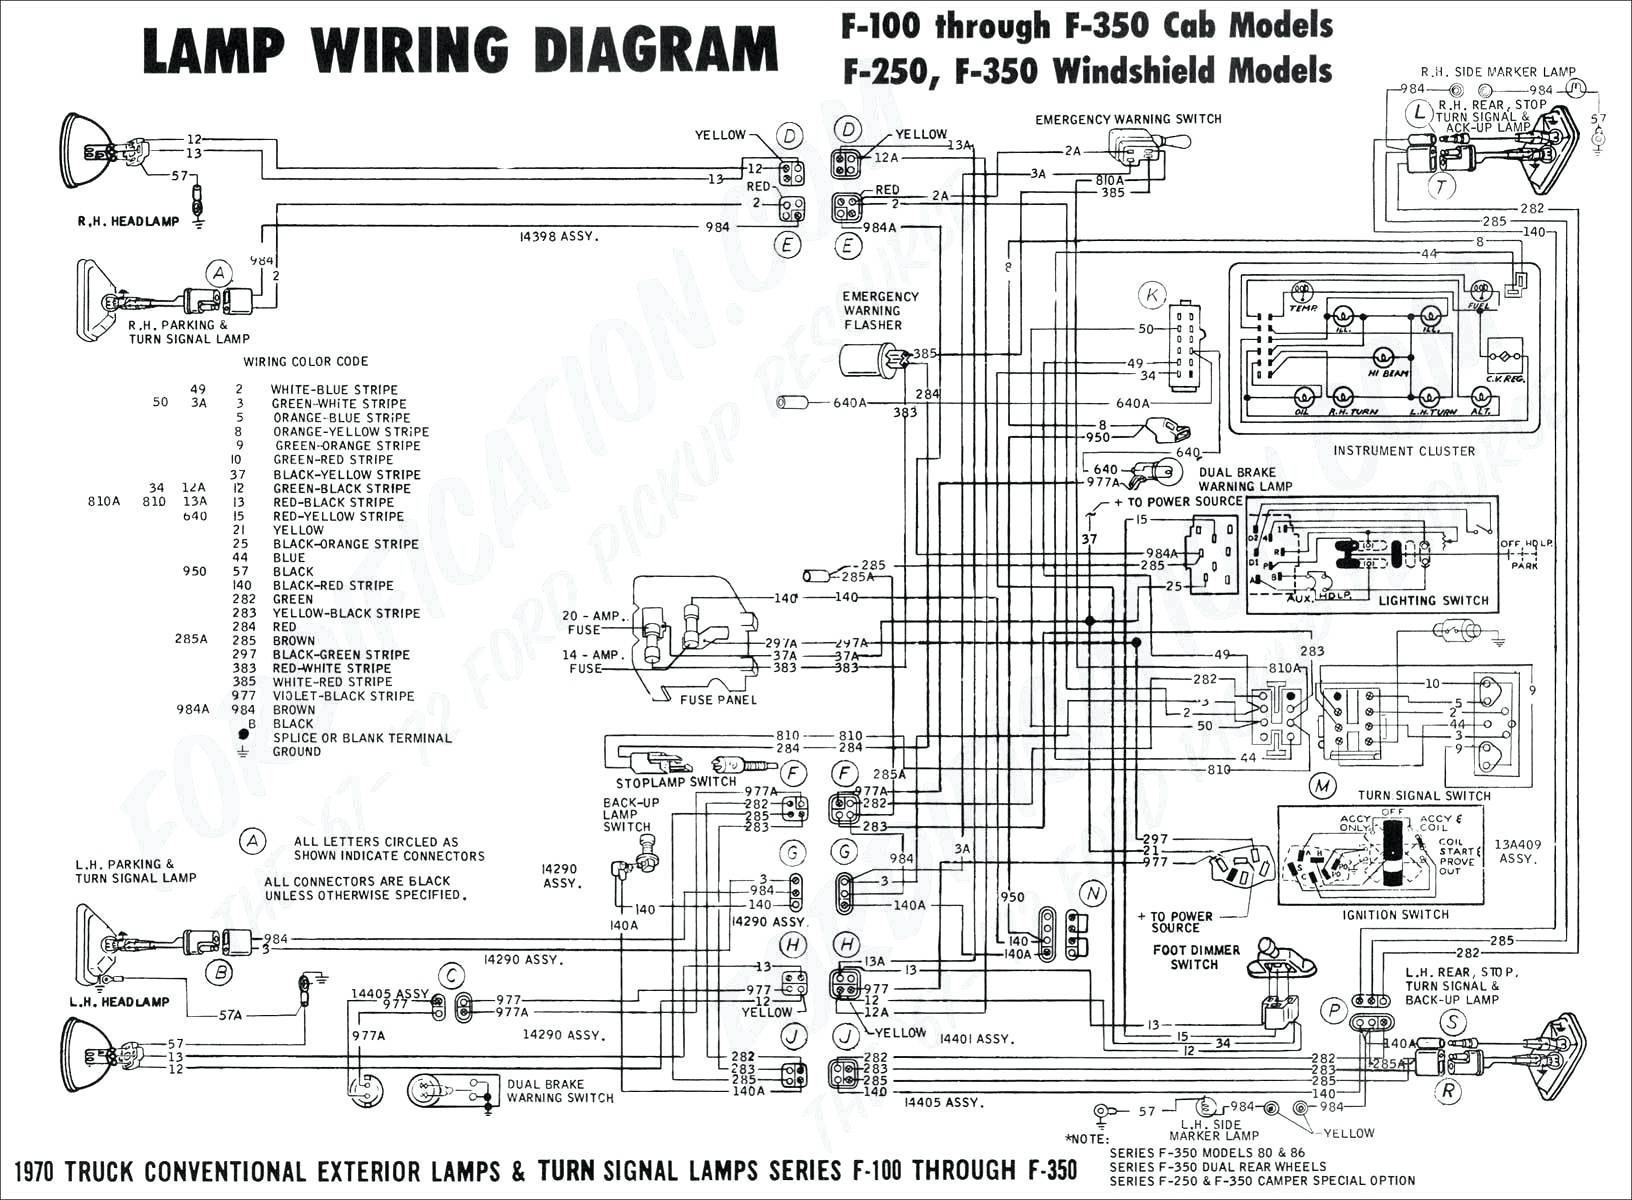 2003 Mitsubishi Eclipse Stereo Wiring Diagram Reference Wiring Diagram Ac Mitsubishi Electrical Work Wiring Diagram •